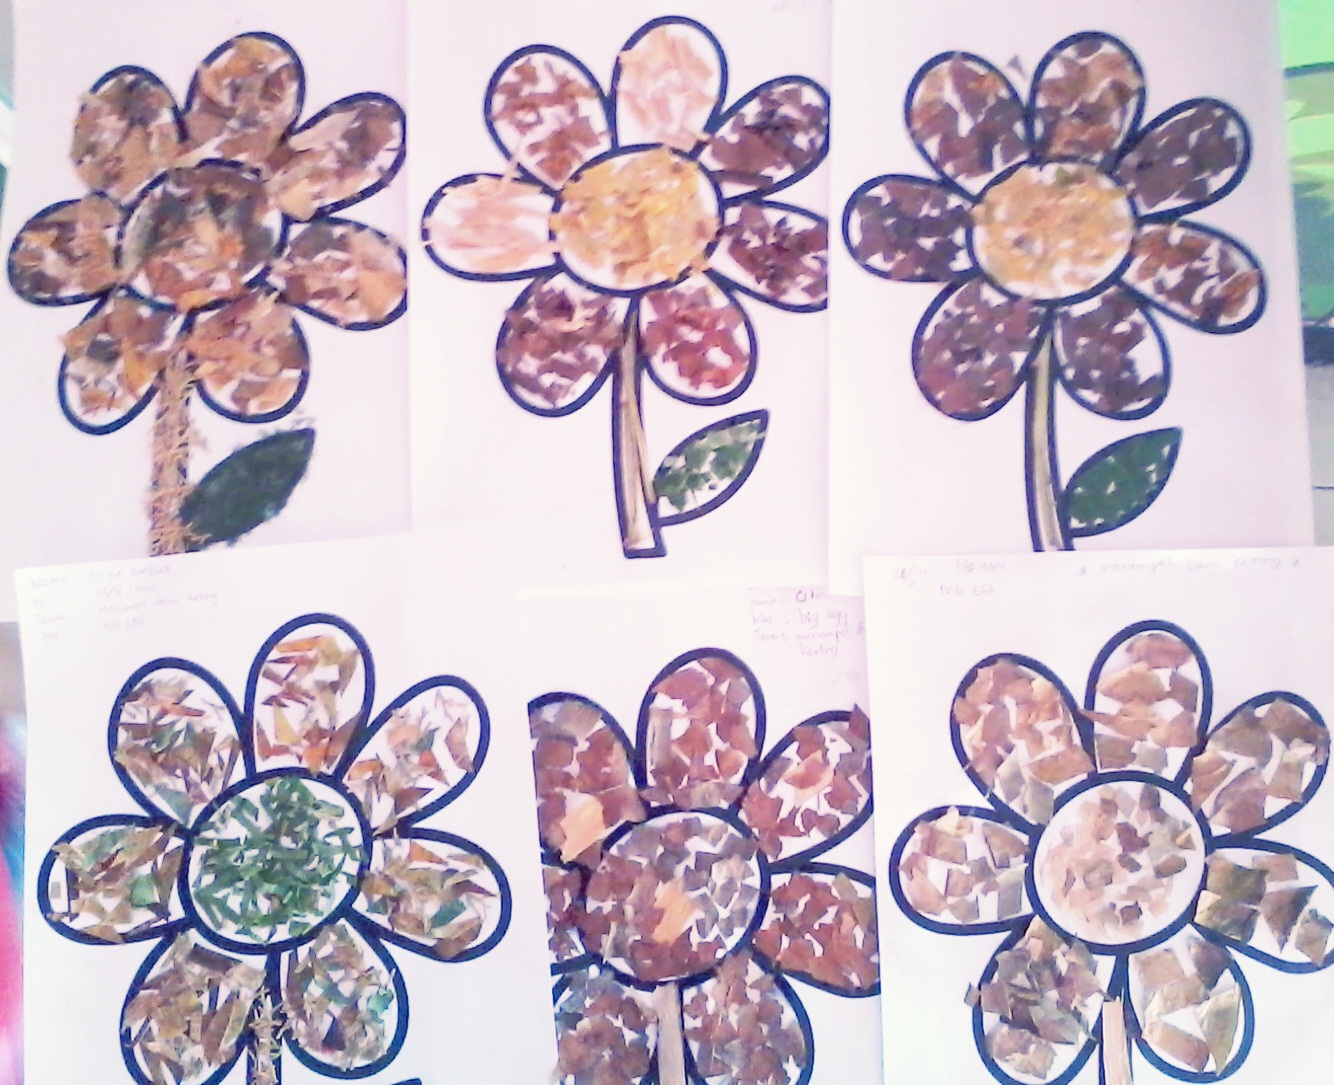 Inilah Contoh Gambar Mozaik Bunga Dari Daun Kering  yang 